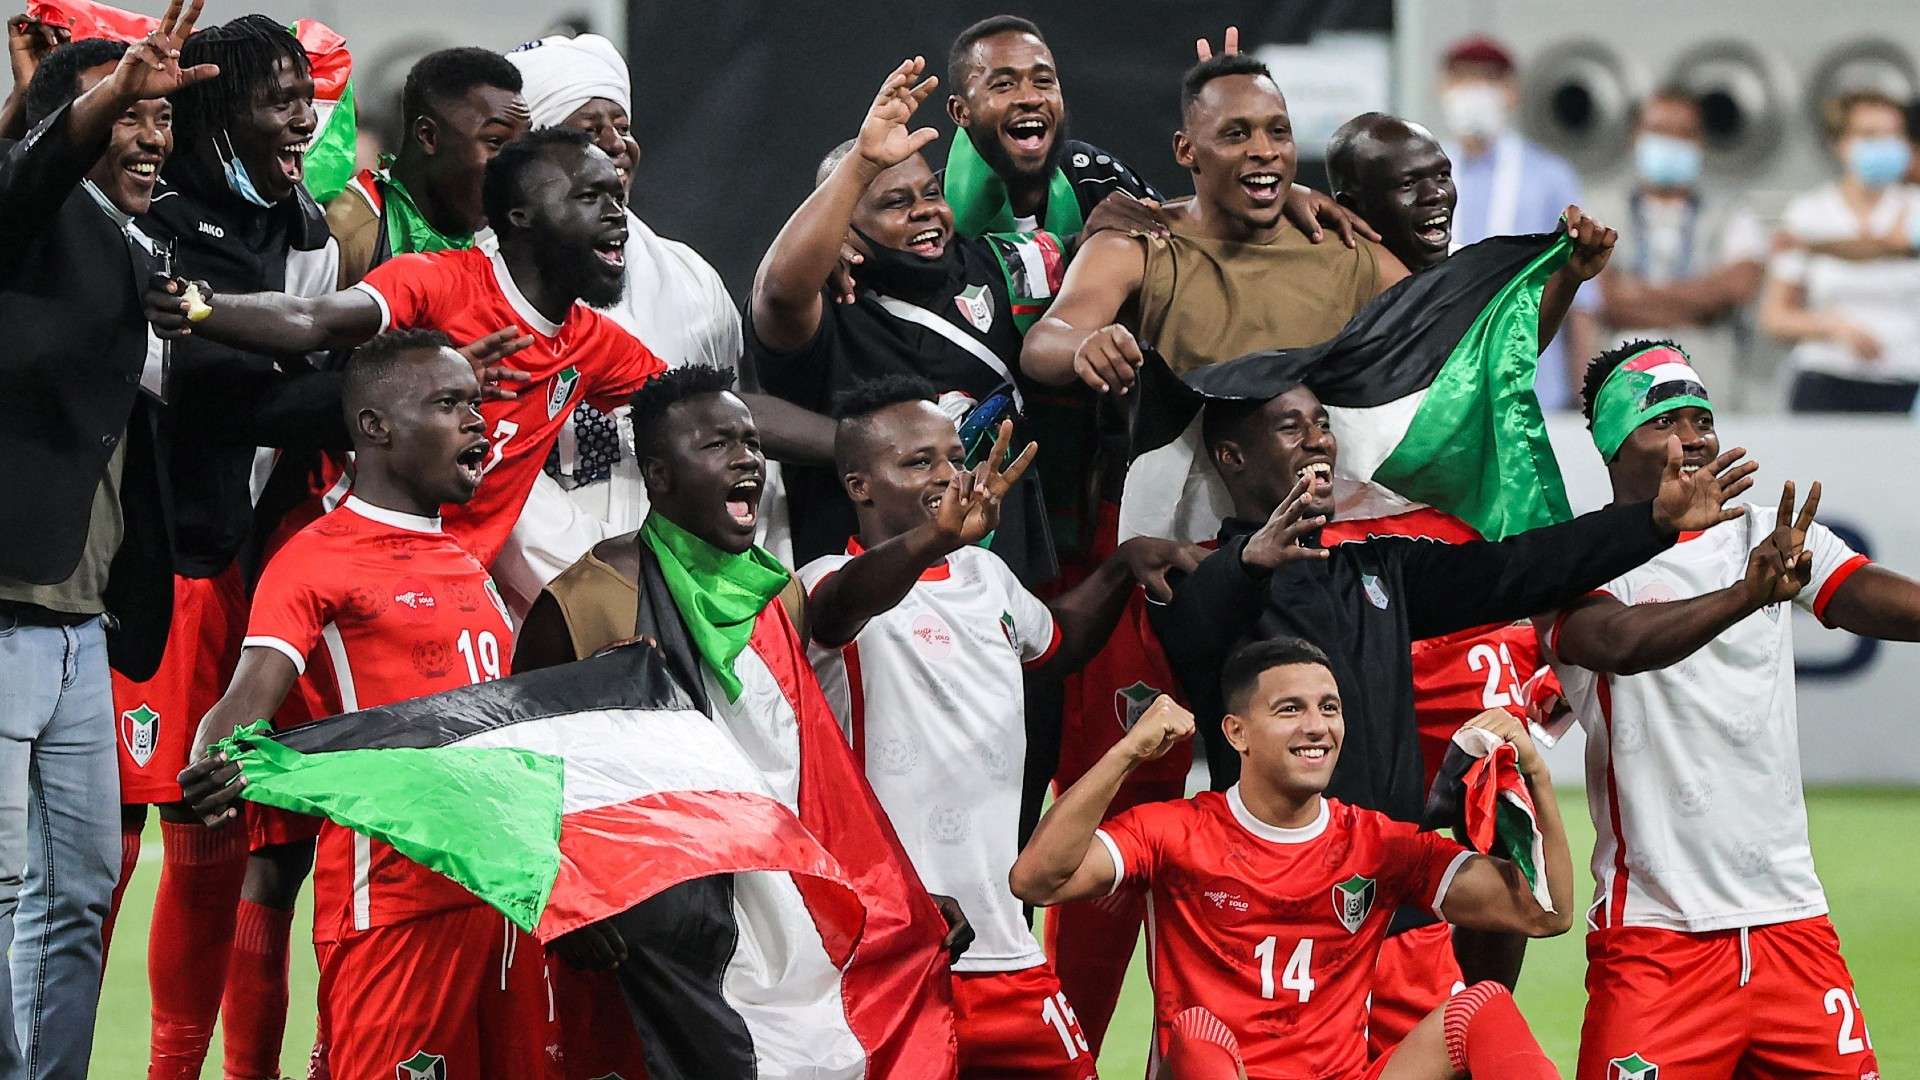 Sudan national team